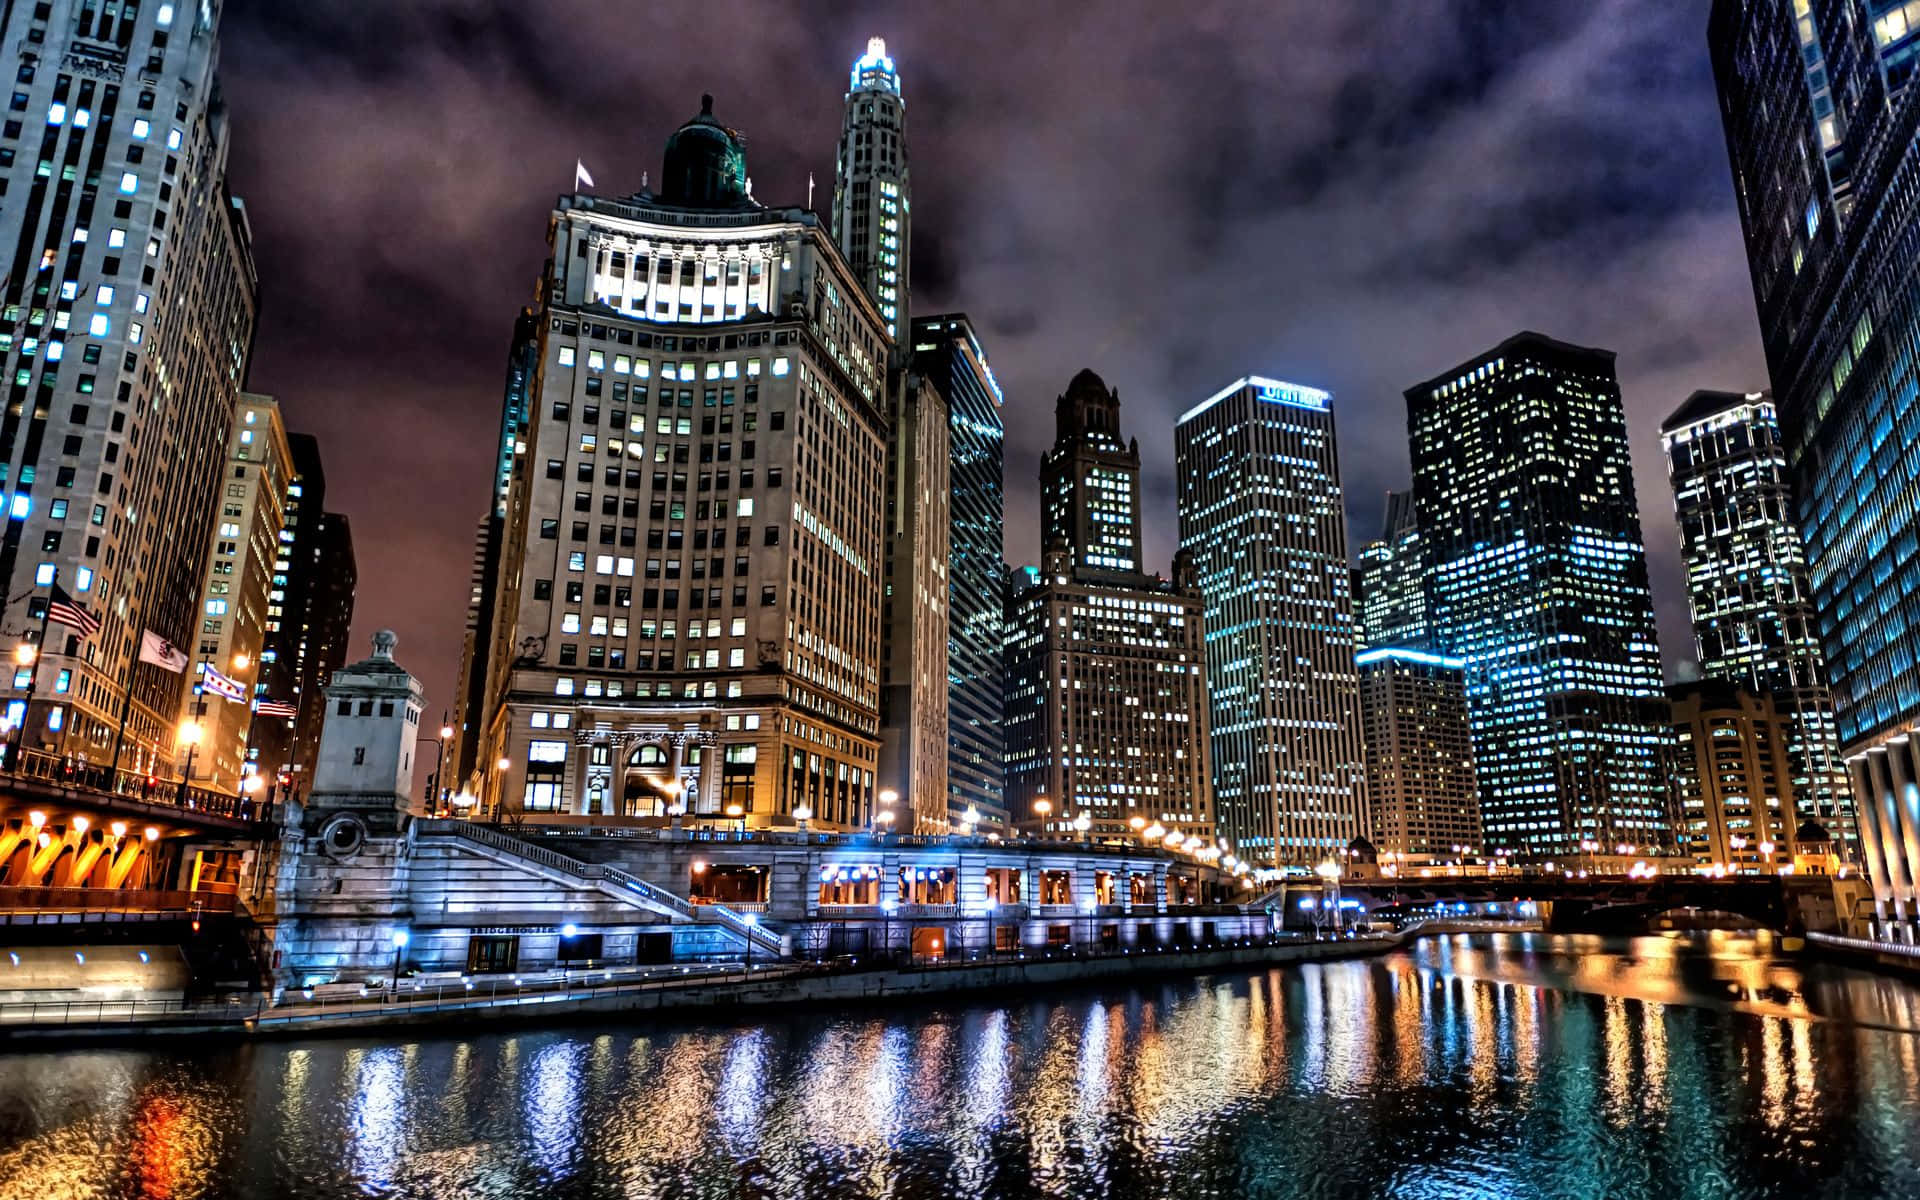 The skyline of Chicago, Illinois